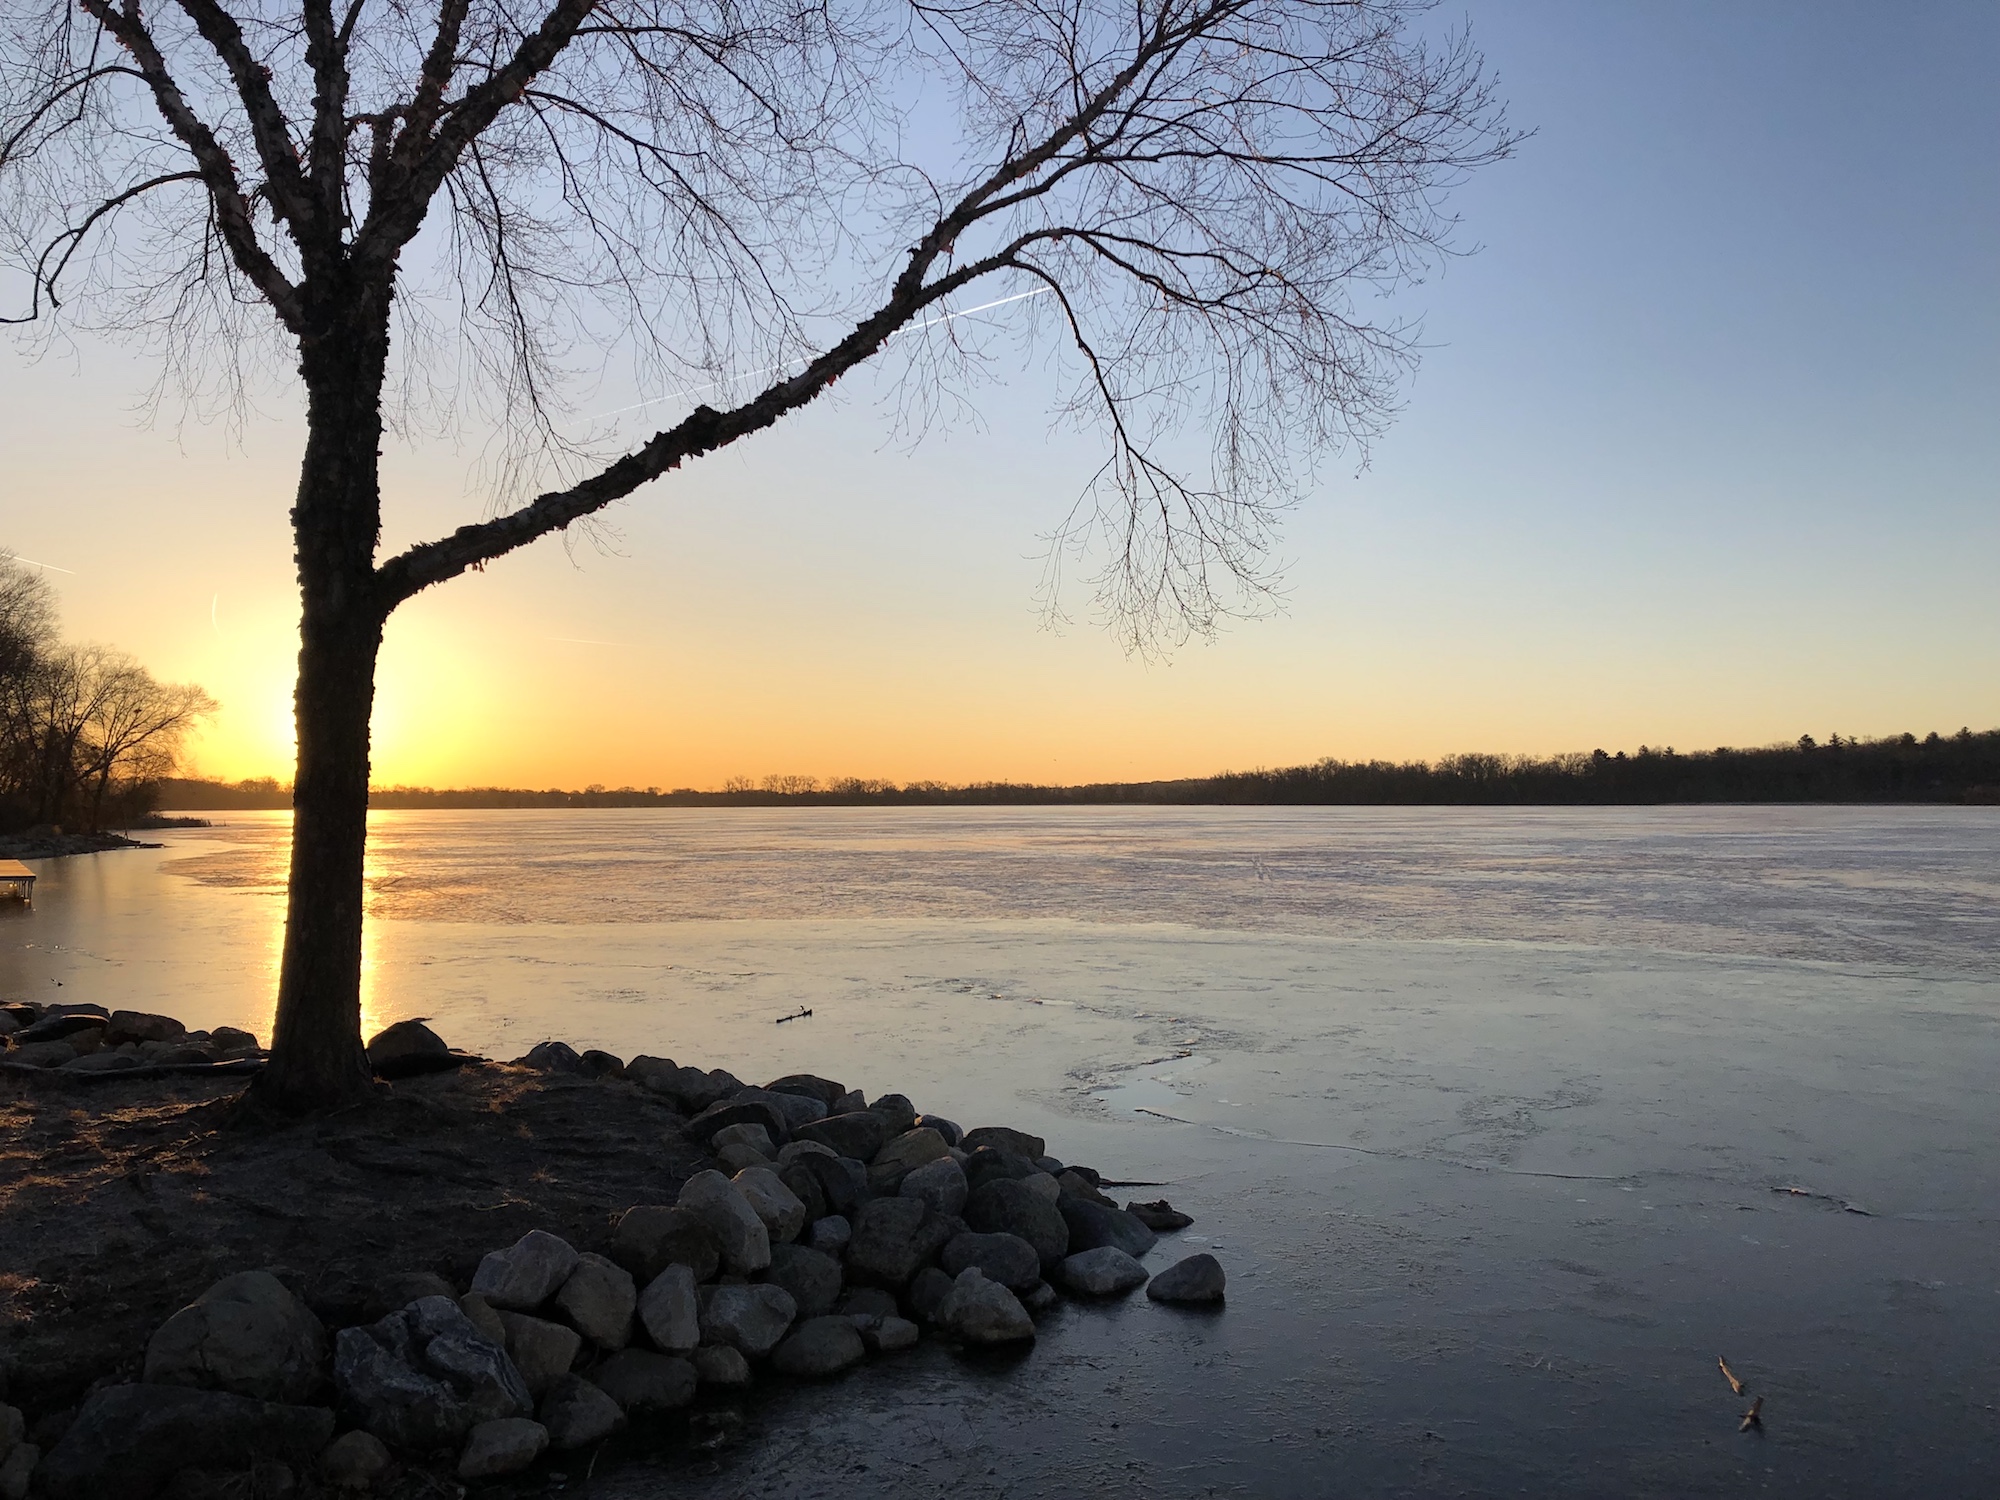 Lake Wingra on March 26, 2019.